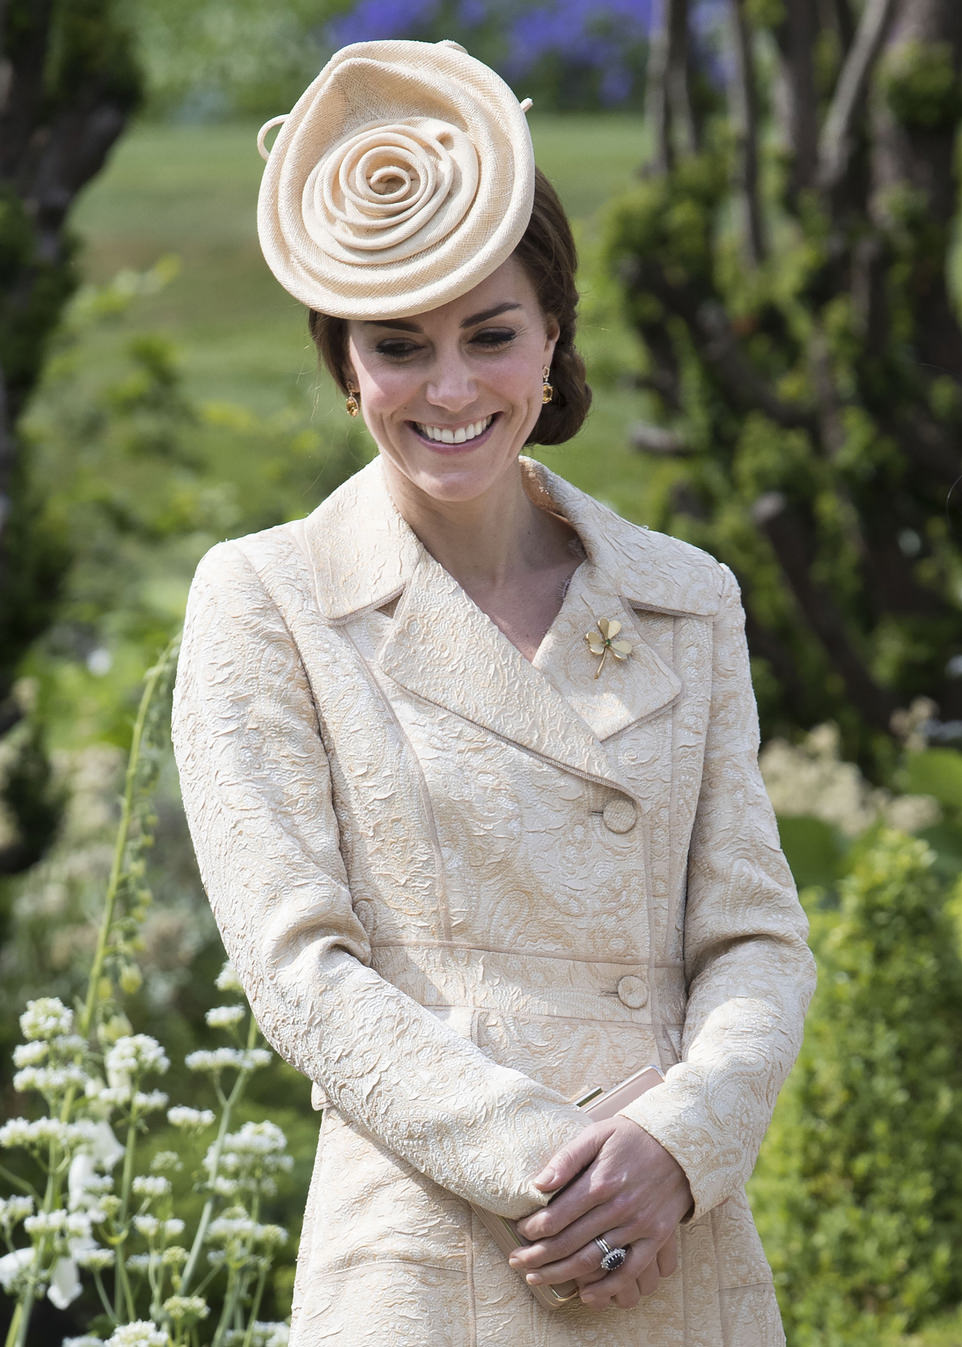 Catherine-Duchess-Cambridge-Kate-Middleton-Secretary-State-Northern-Ireland-Garden-Party-Fashion-Tom-Lorenzo-Site (1)